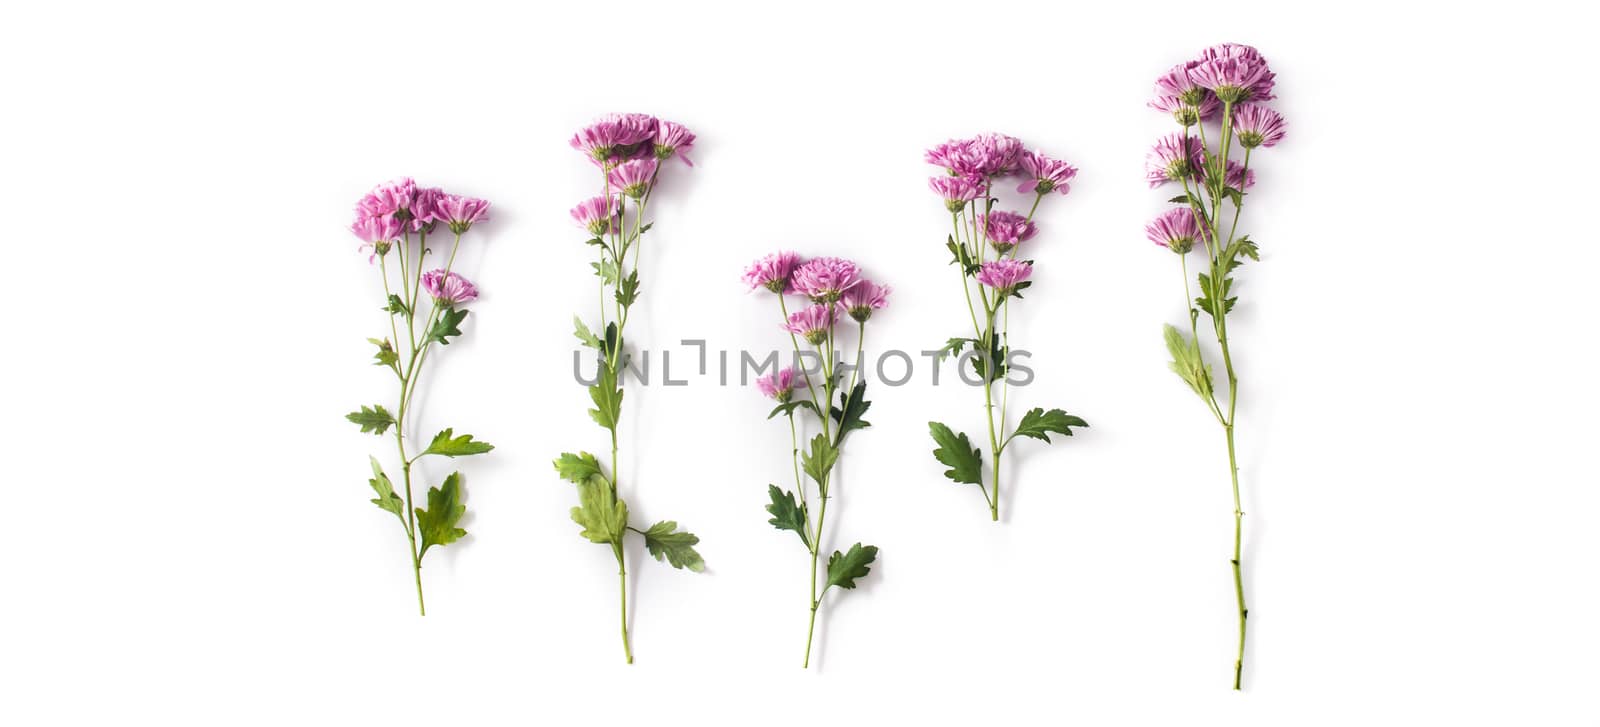 Violet chrysanthemum flowers bouquet by chandlervid85